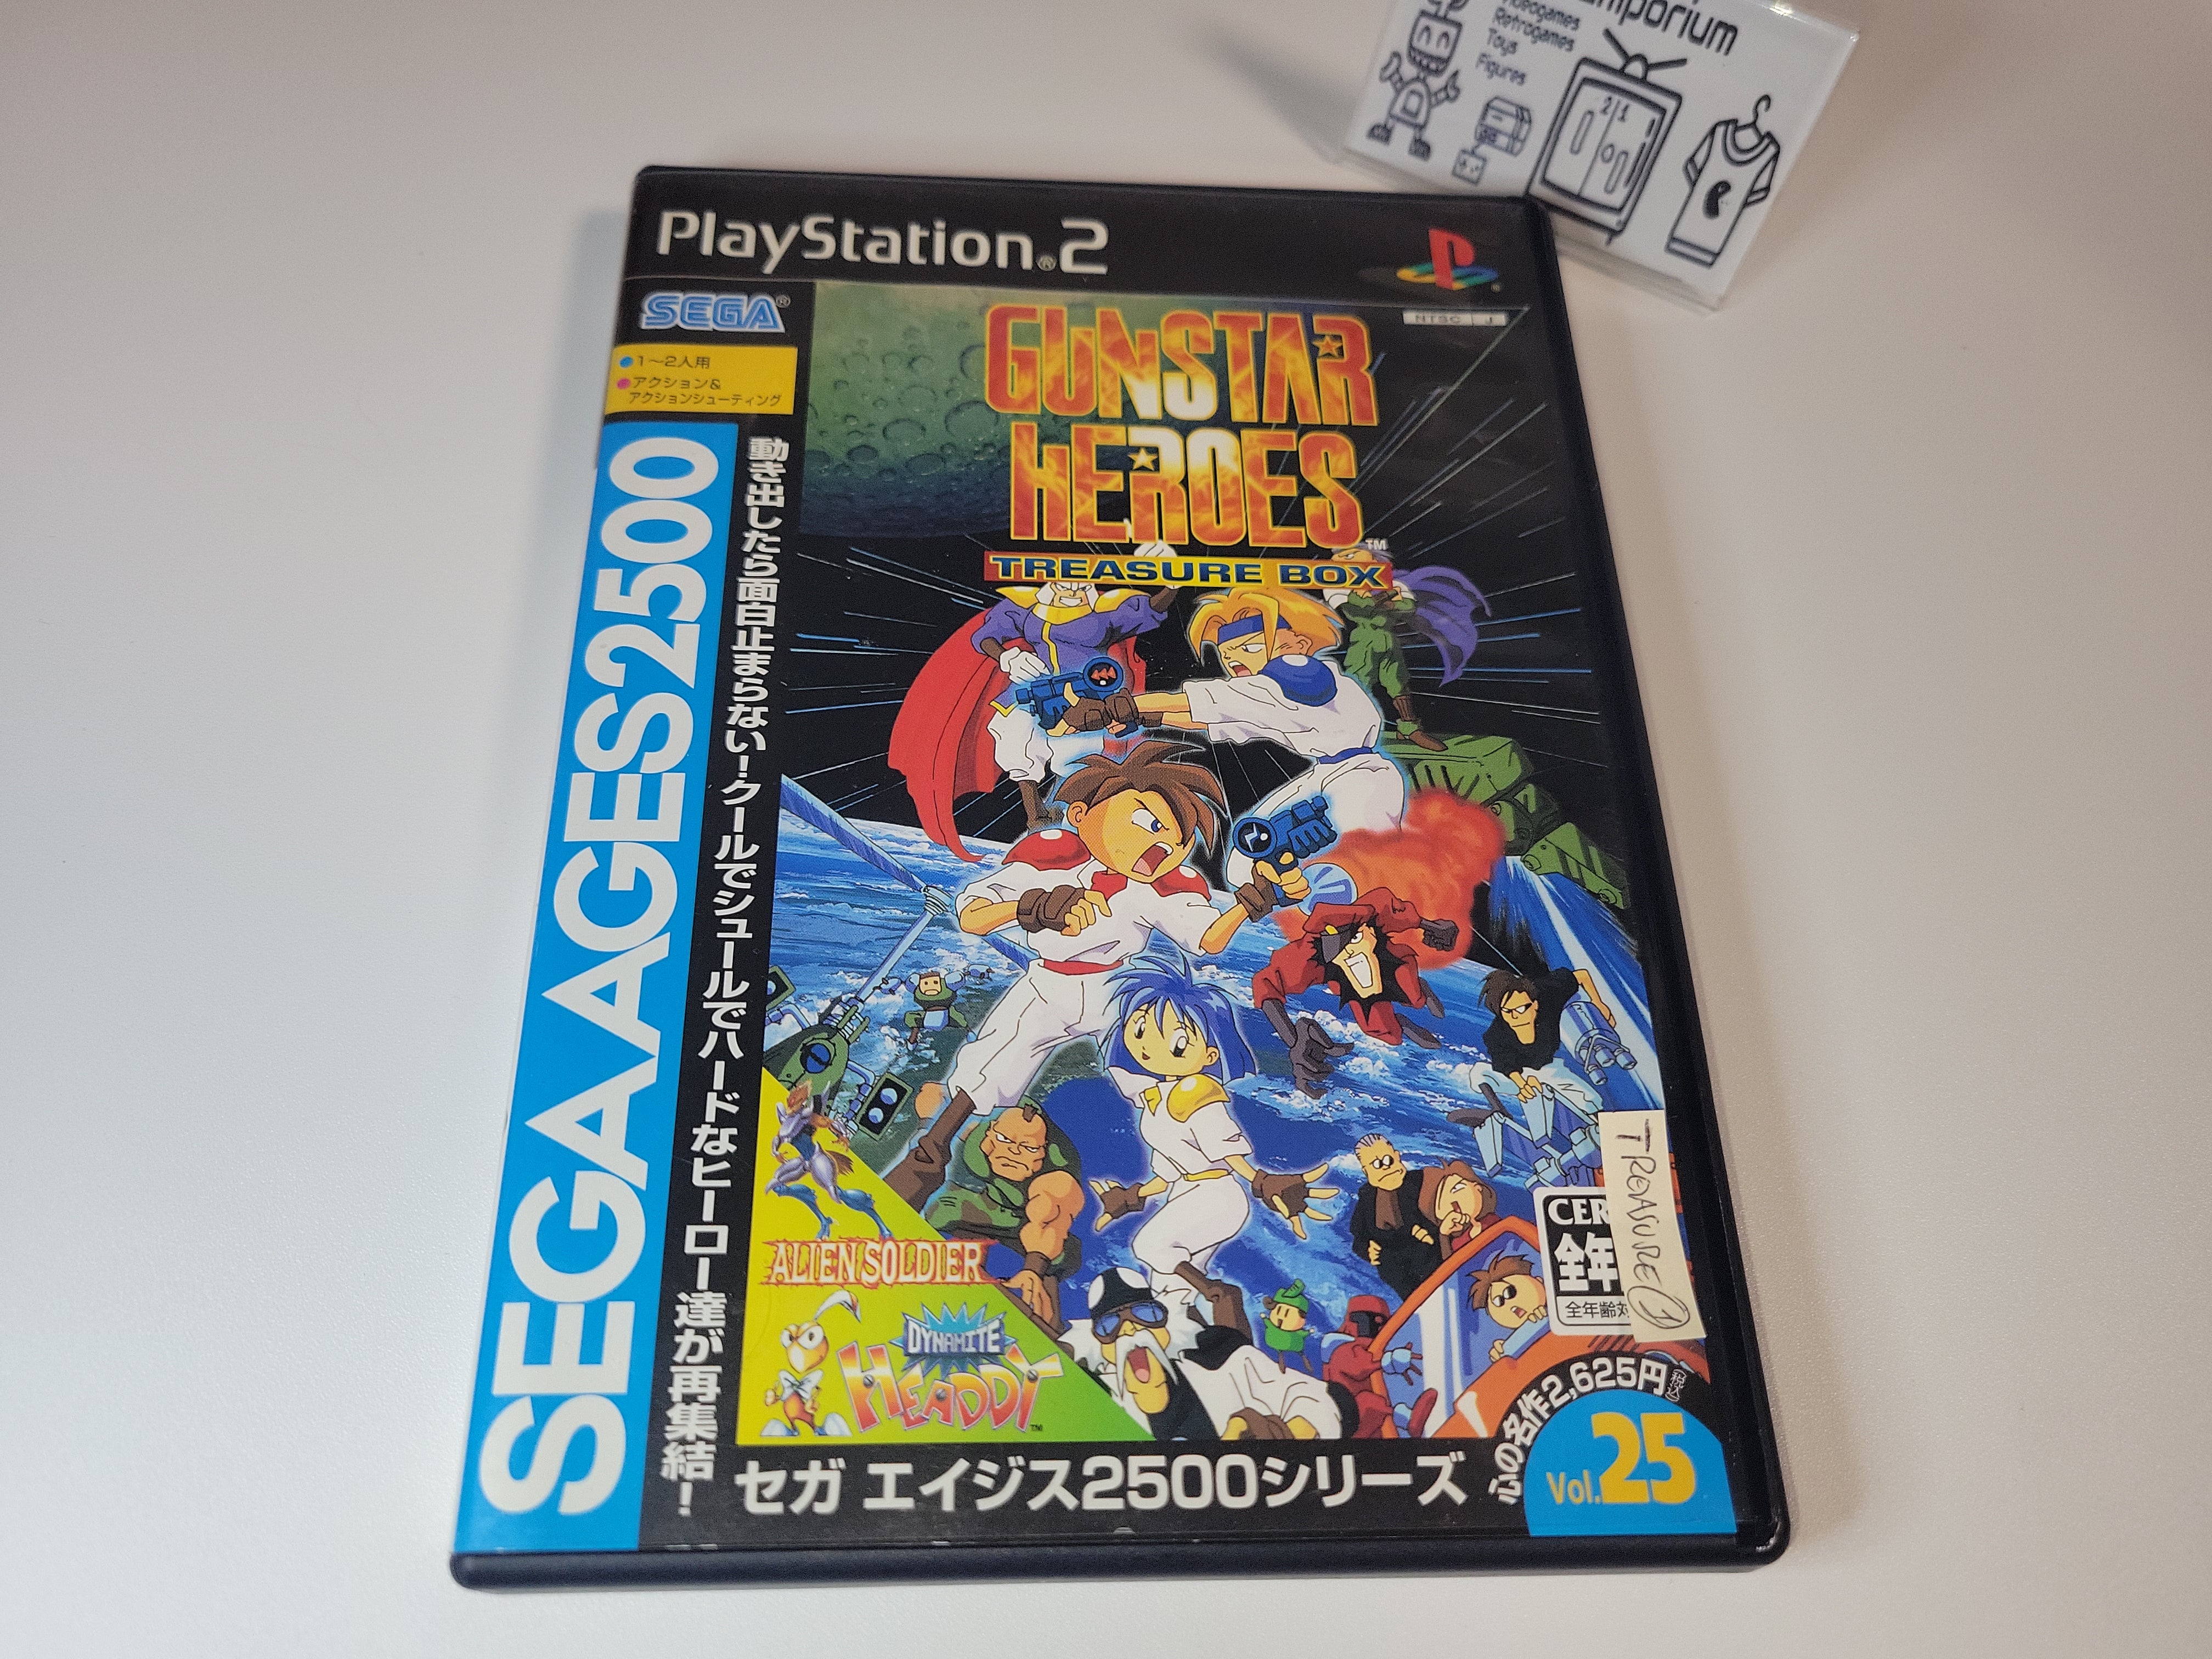 Sega Ages 2500 Series Vol. 25: Gunstar Heroes Treasure Box - Sony  playstation 2